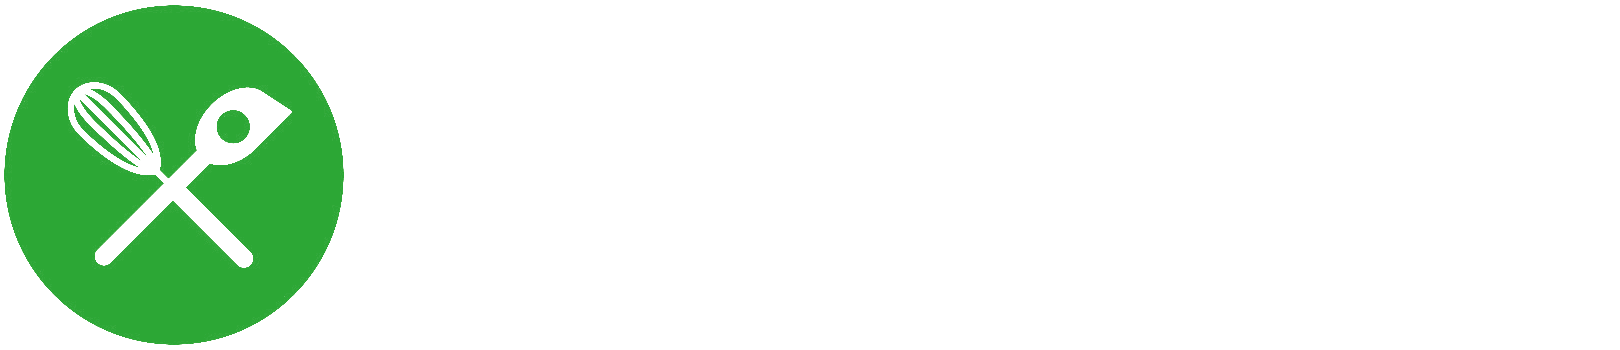 Food Boutique Logo